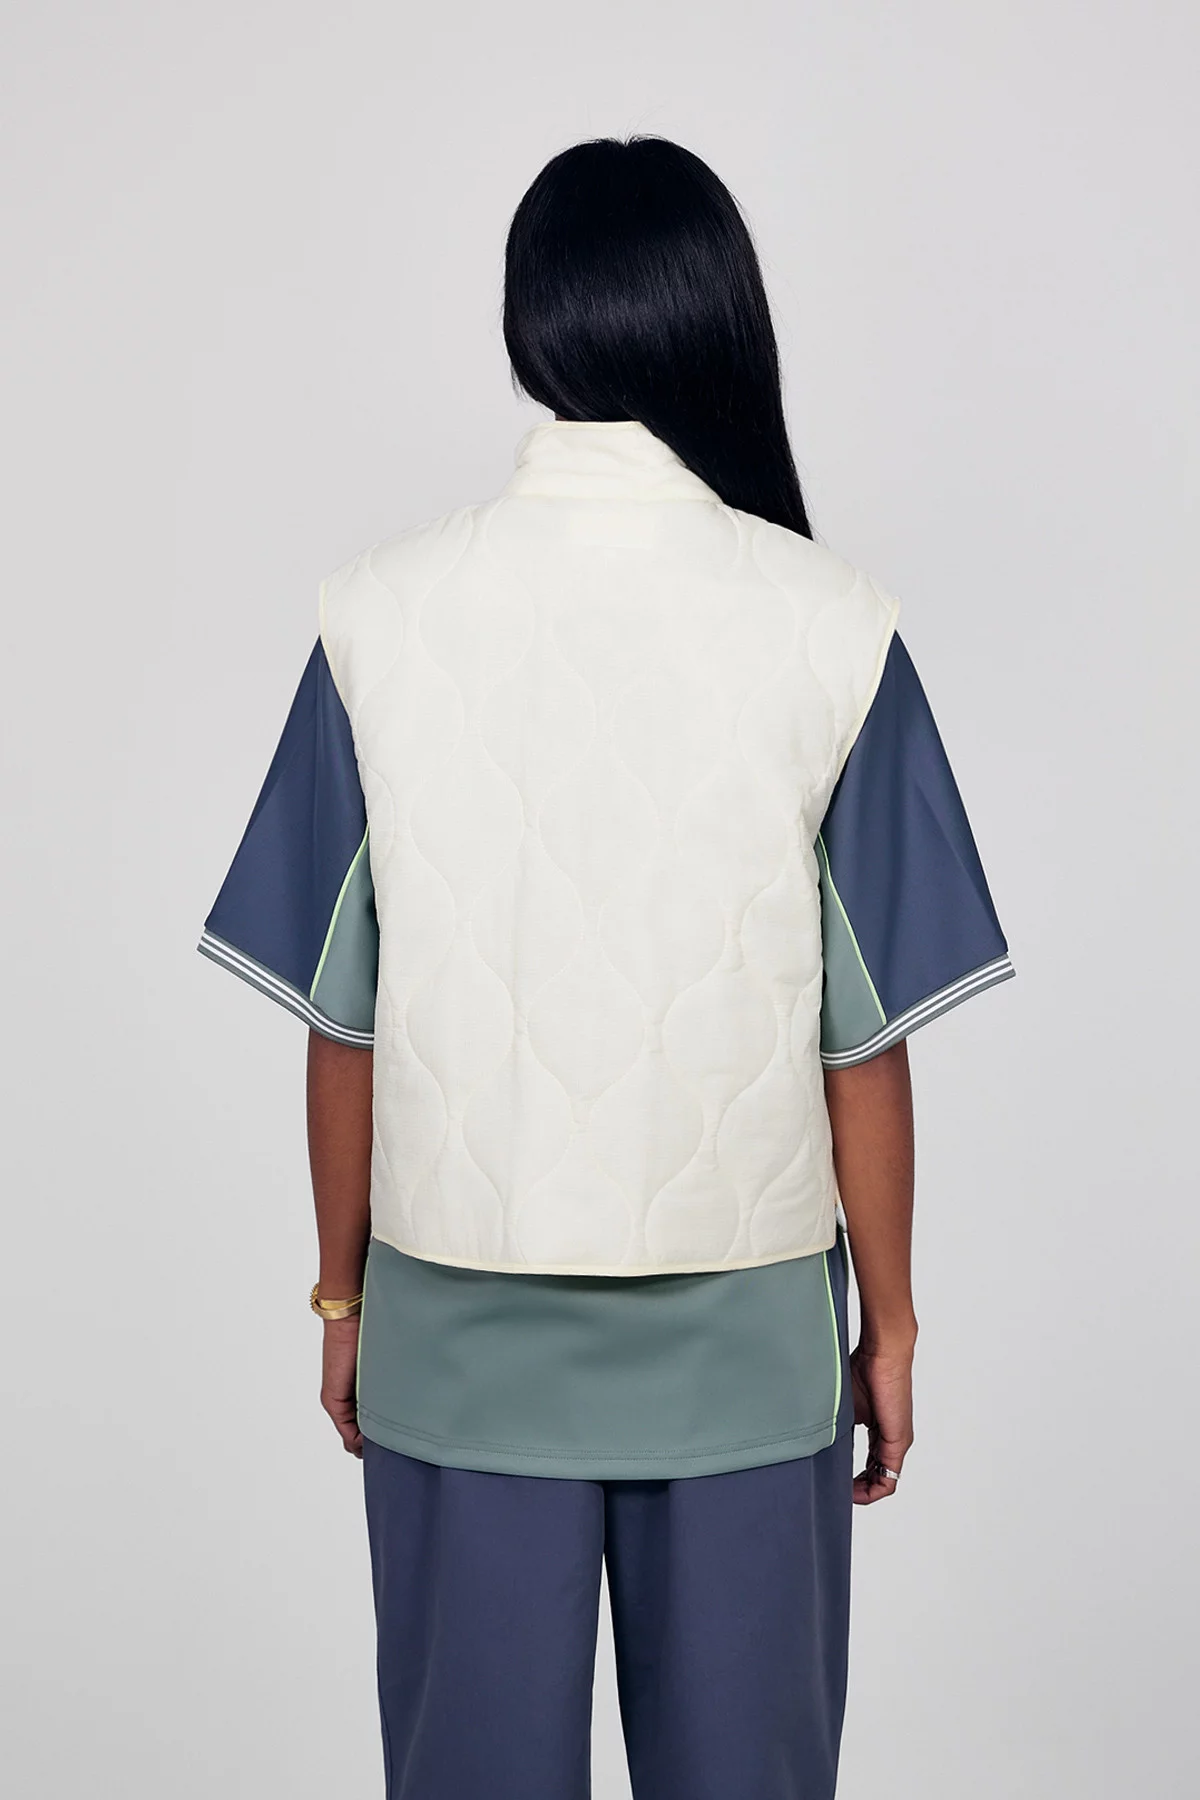 Iris sleeveless quilted jacket